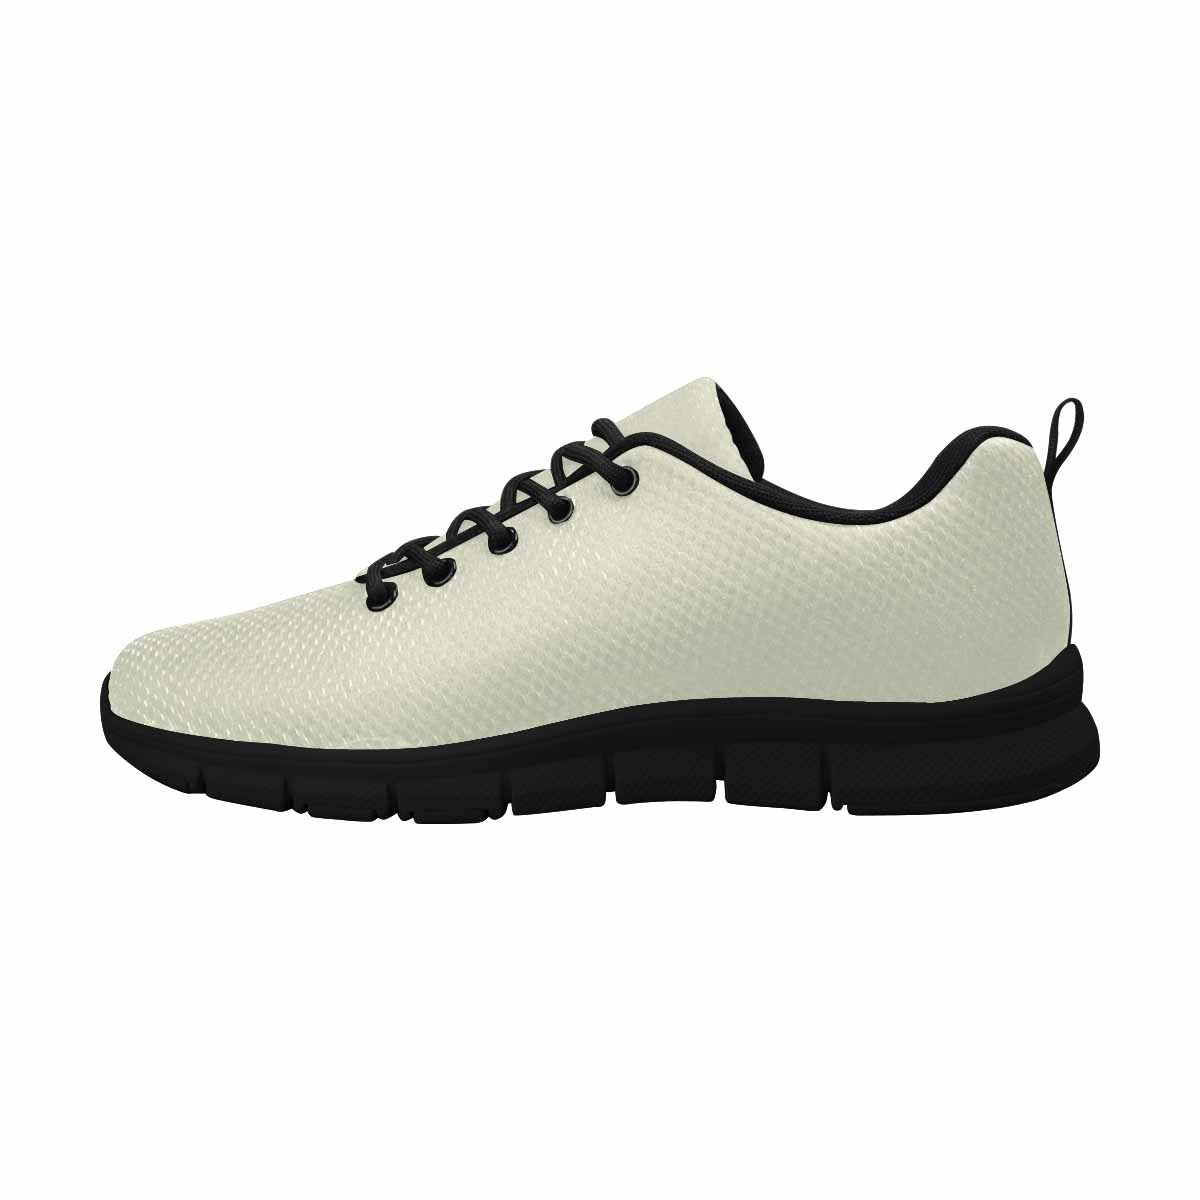 Sneakers For Men, Beige Running Shoes